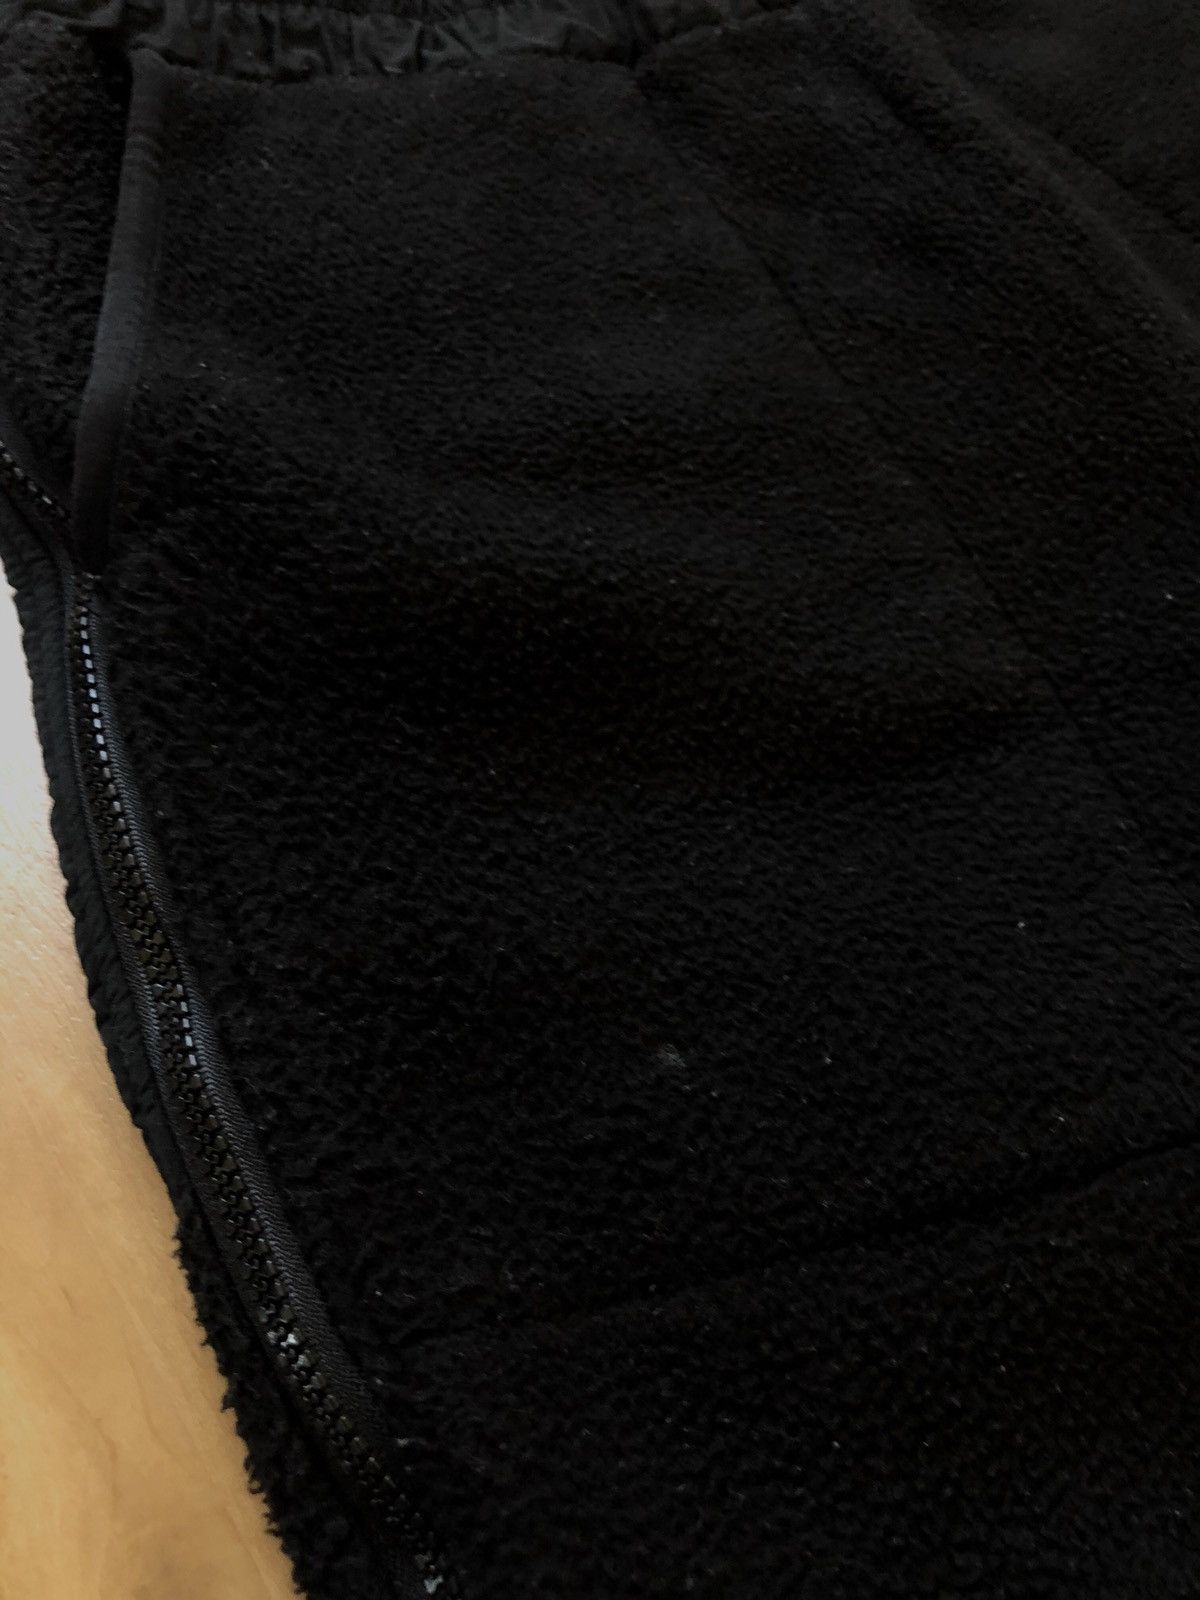 The North Face The North Face Vintage Denali Fleece Pants Black Medium 90’s Size US 30 / EU 46 - 5 Thumbnail